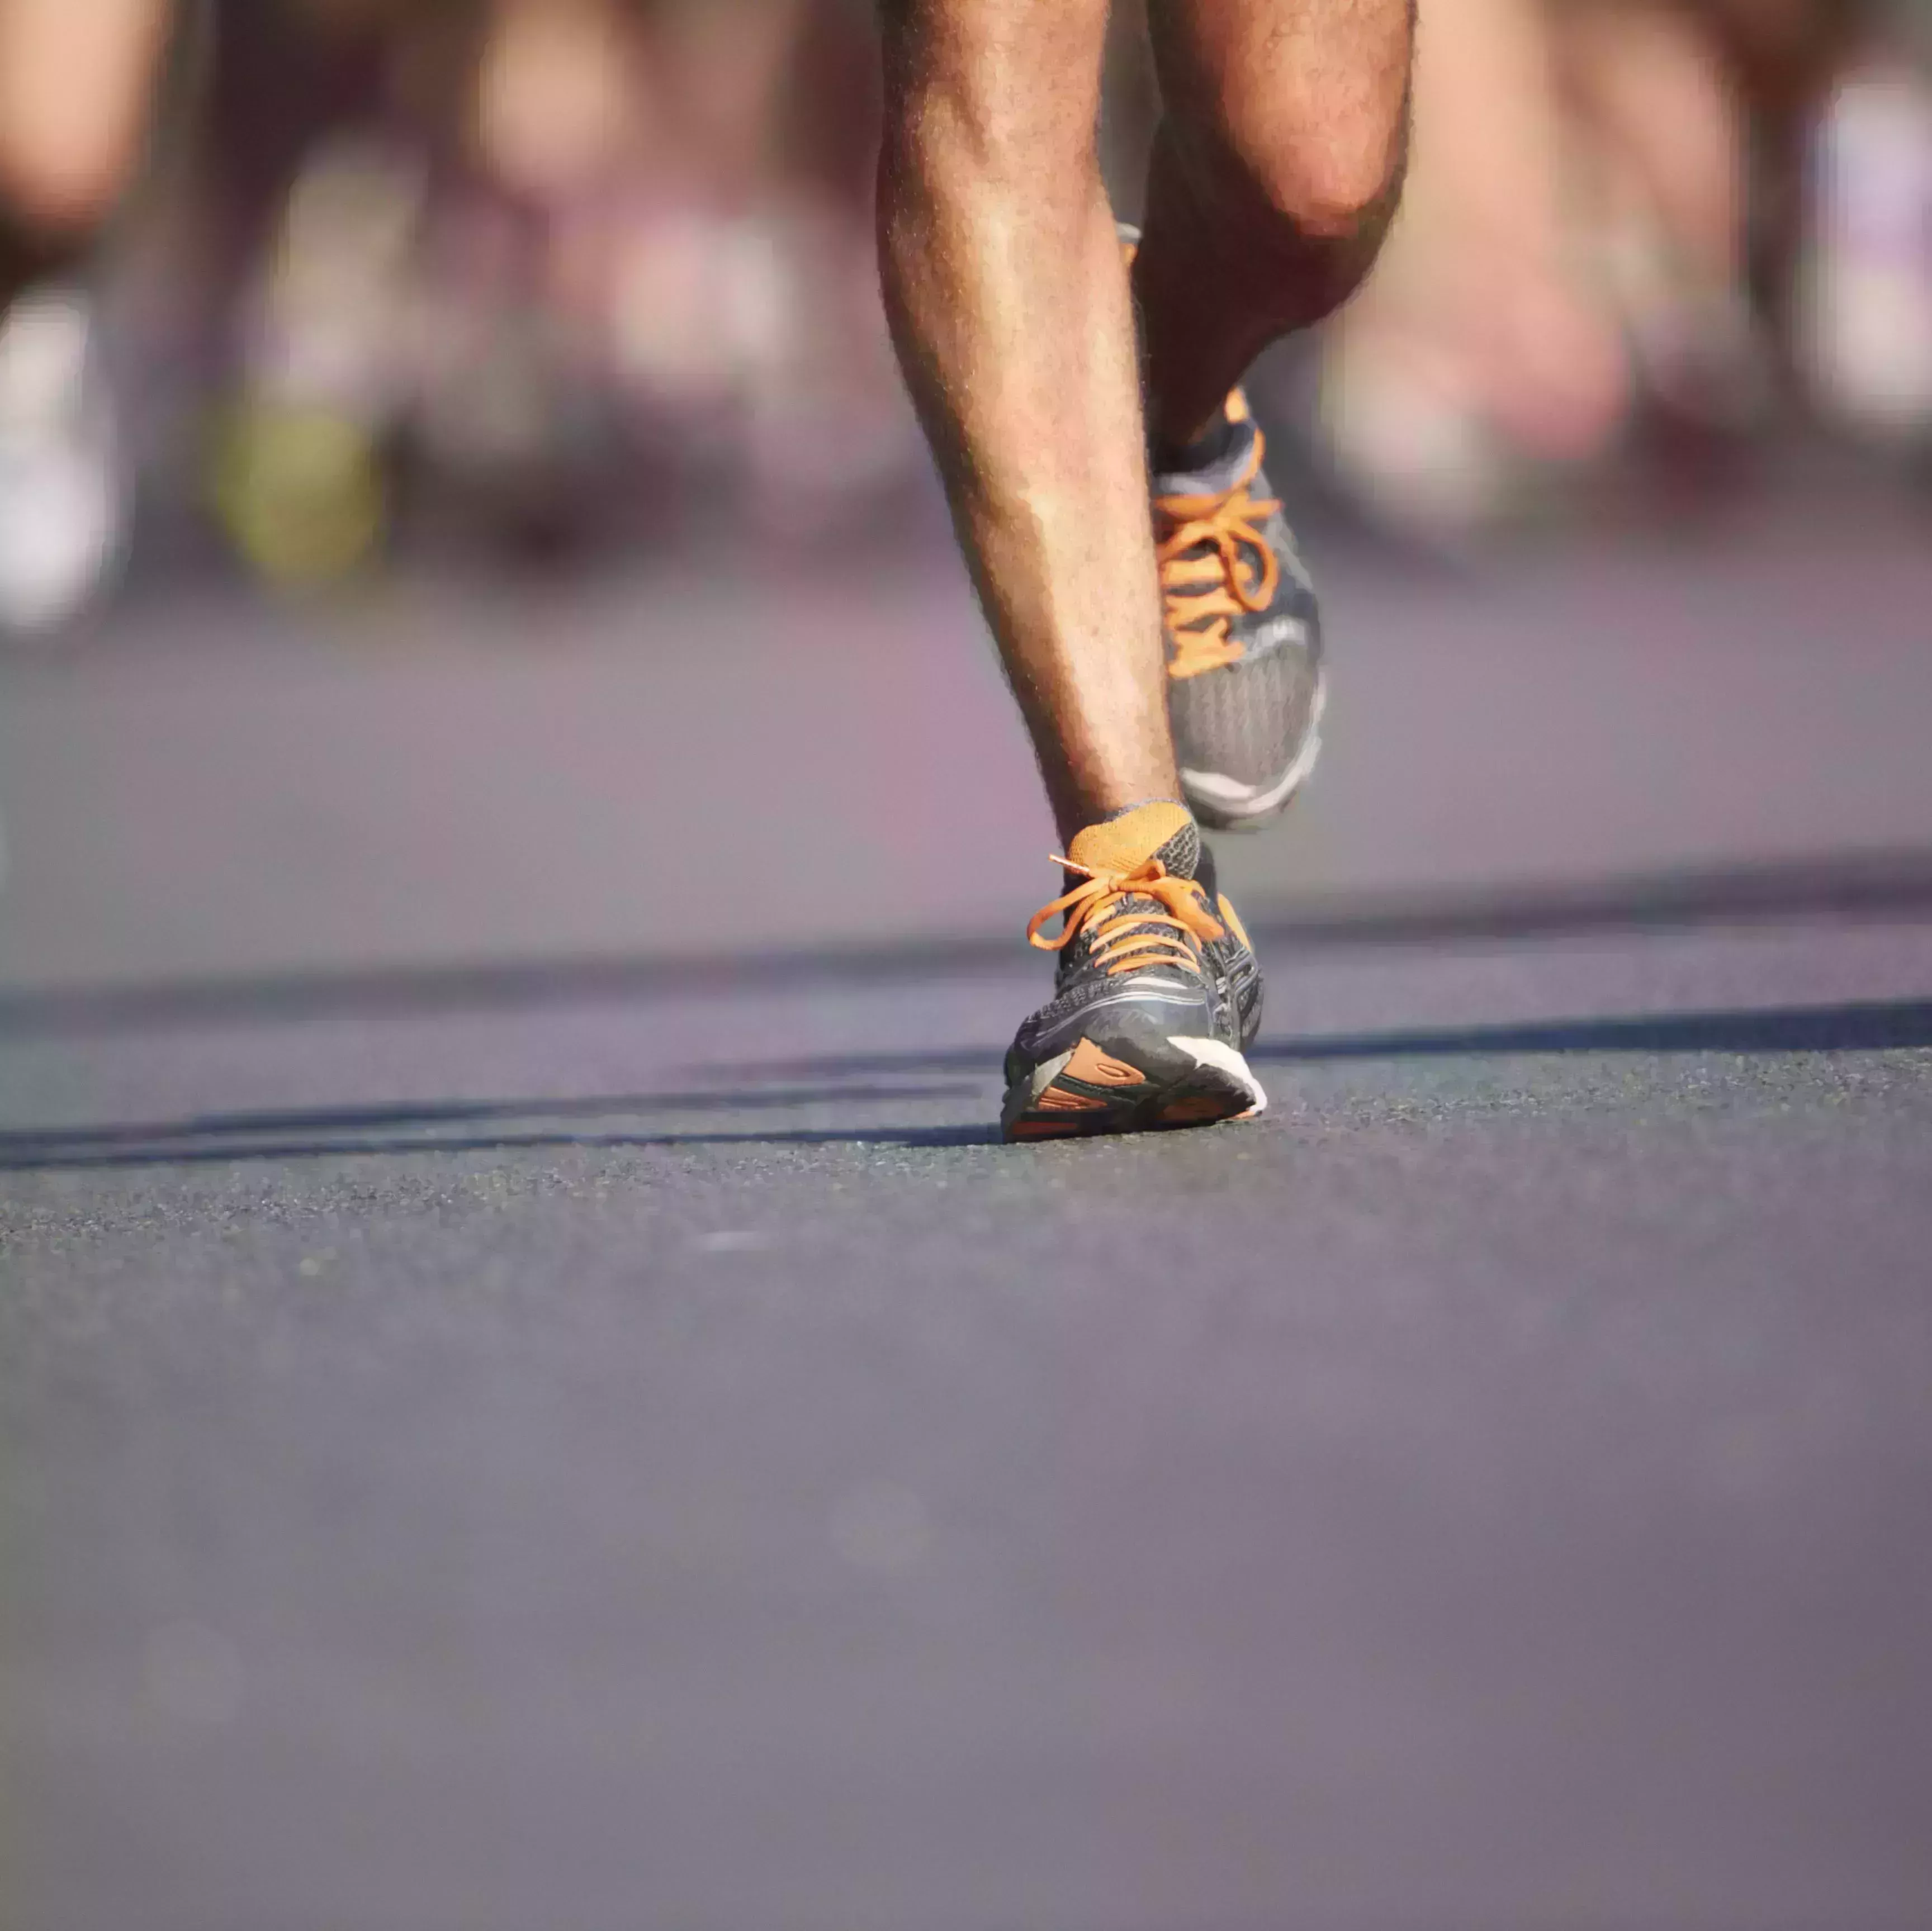 legs and feet of joggers, running a marathon